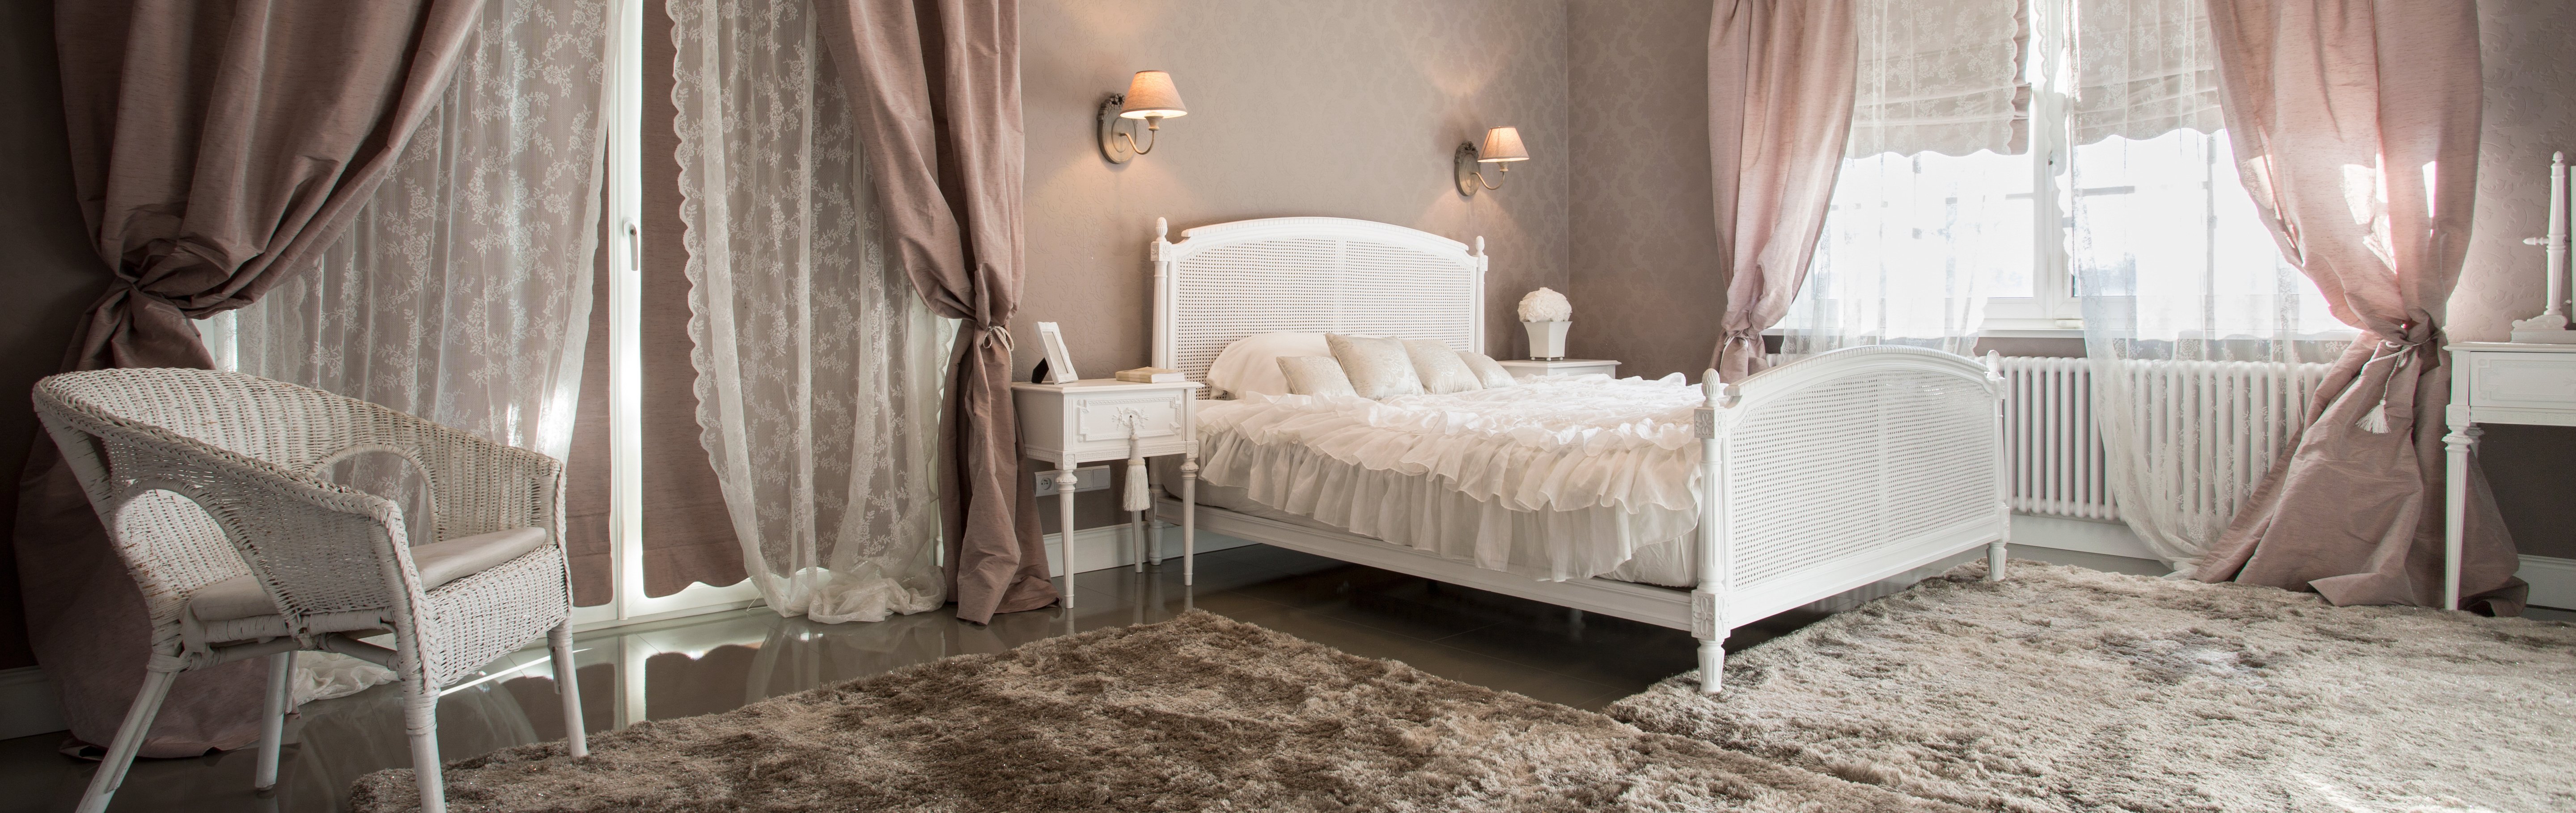 Romantic bedroom designs 